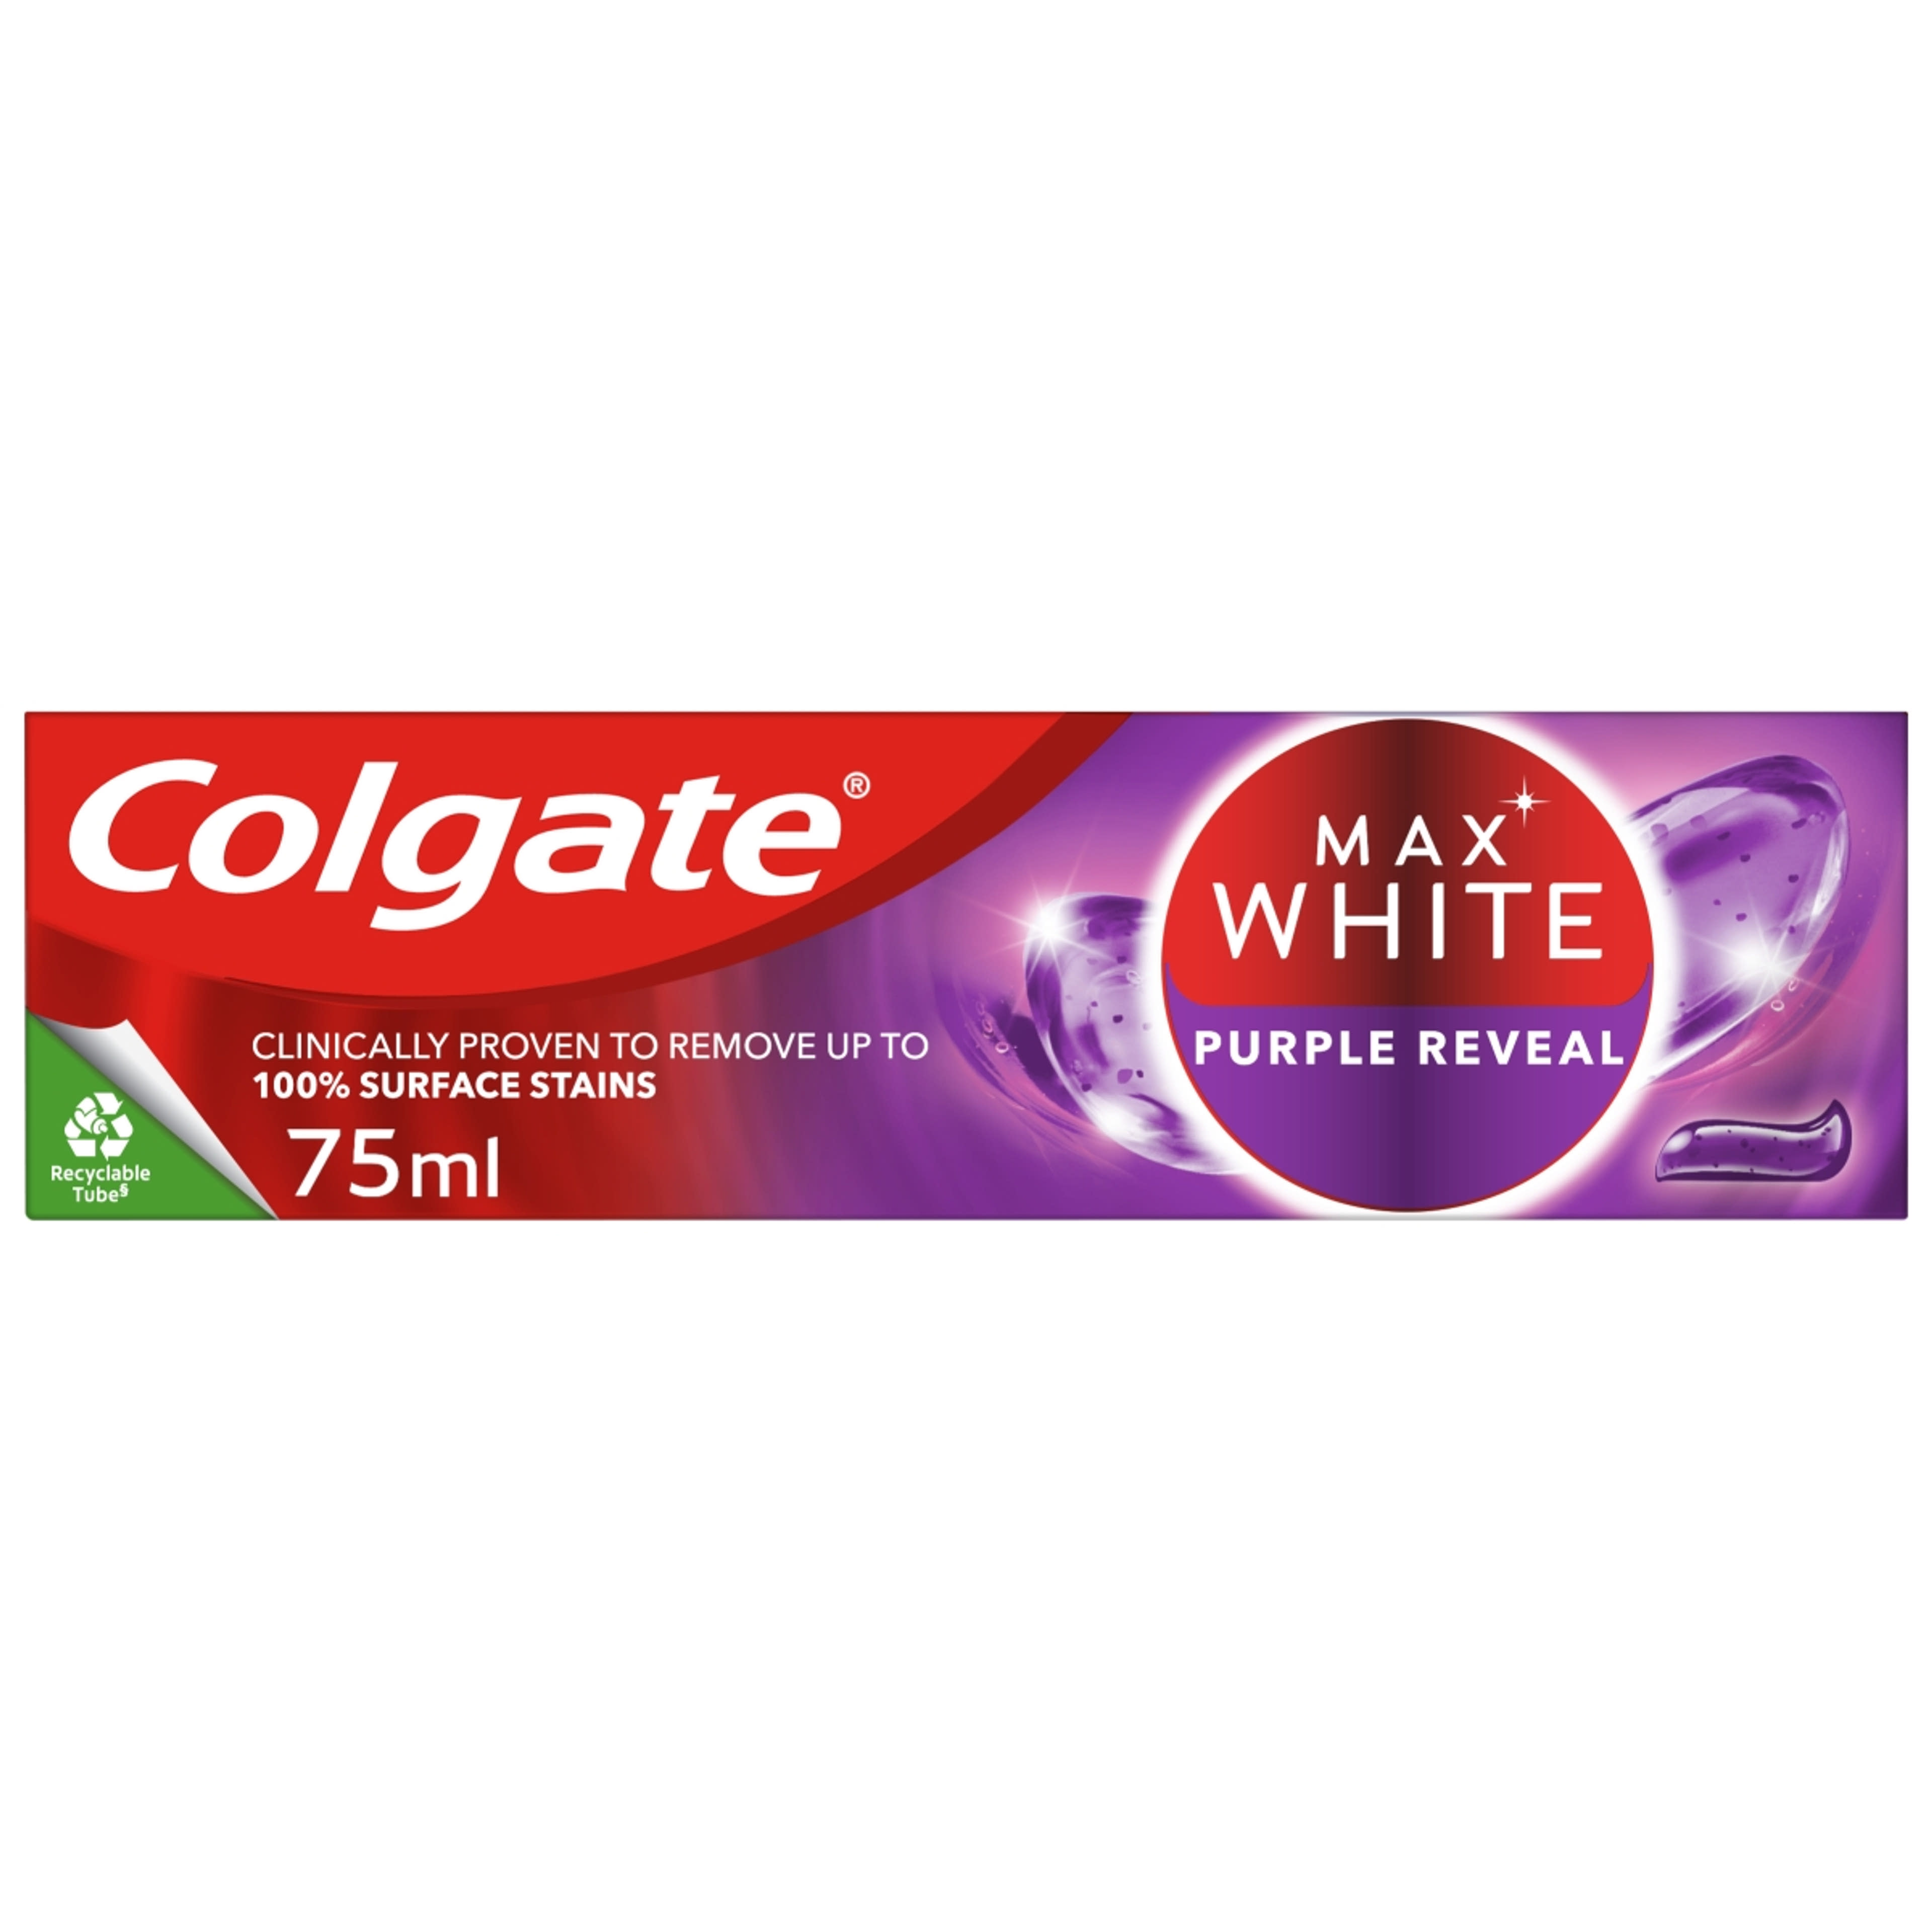 Colgate Max White Purple Reveal fogfehérítő fogkrém - 75 ml-10